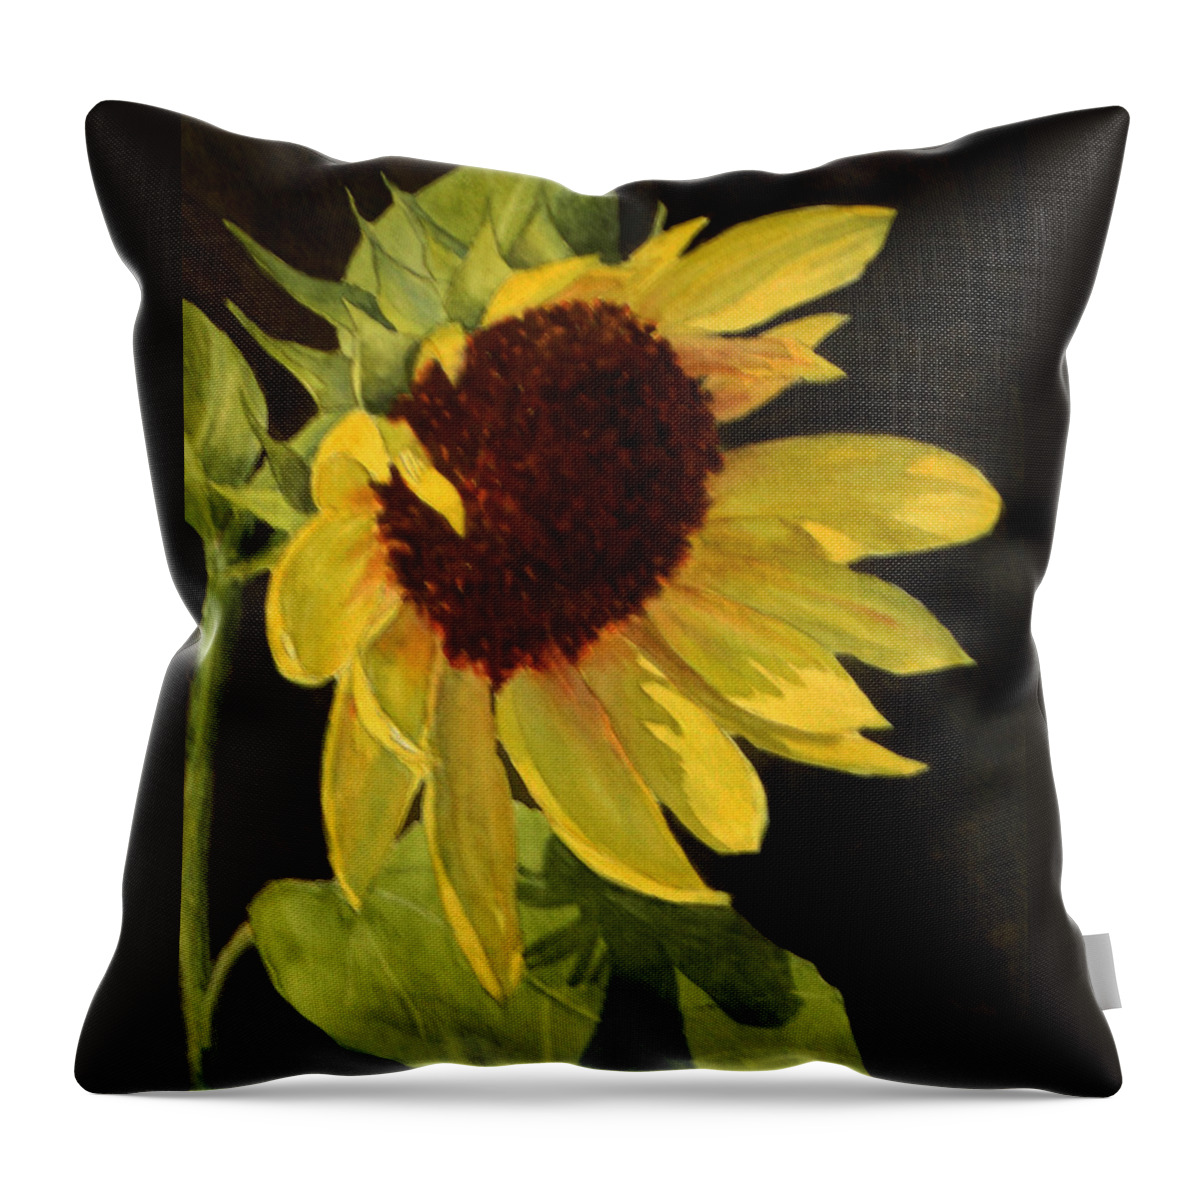 Sunflower Throw Pillow featuring the painting Sunflower Smile by Vikki Bouffard